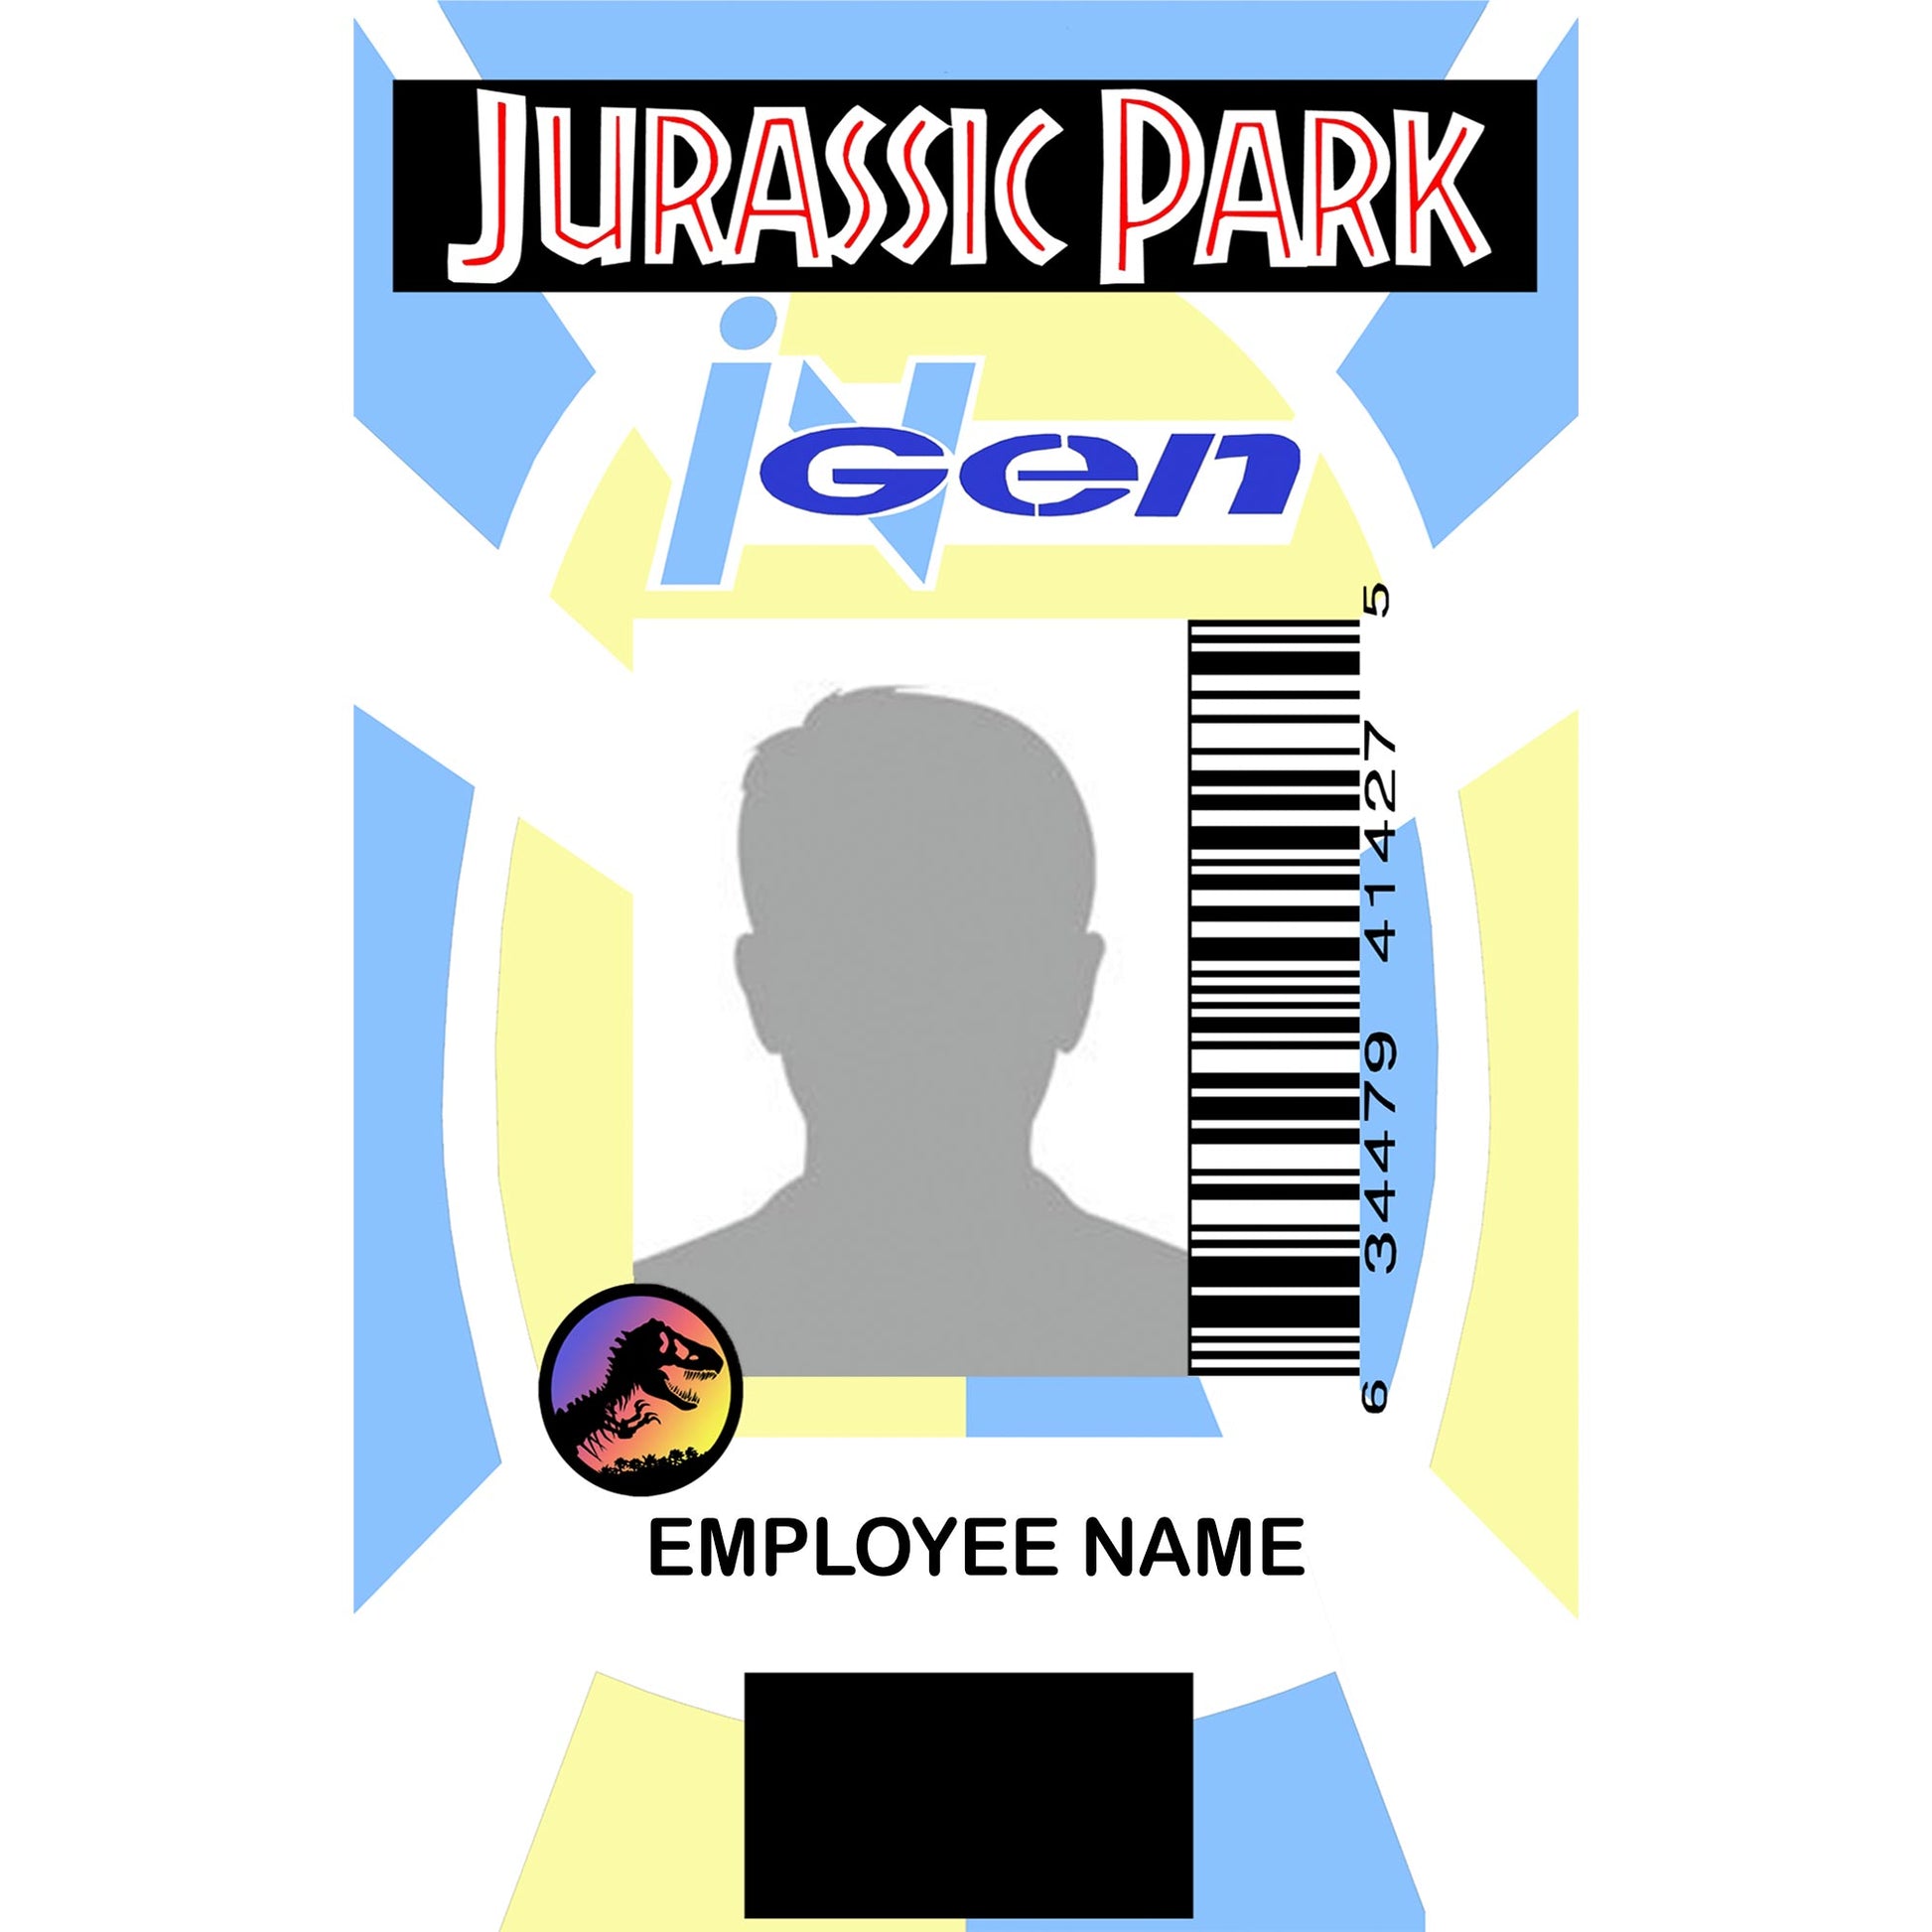 Jurassic Park Employee ID Badge